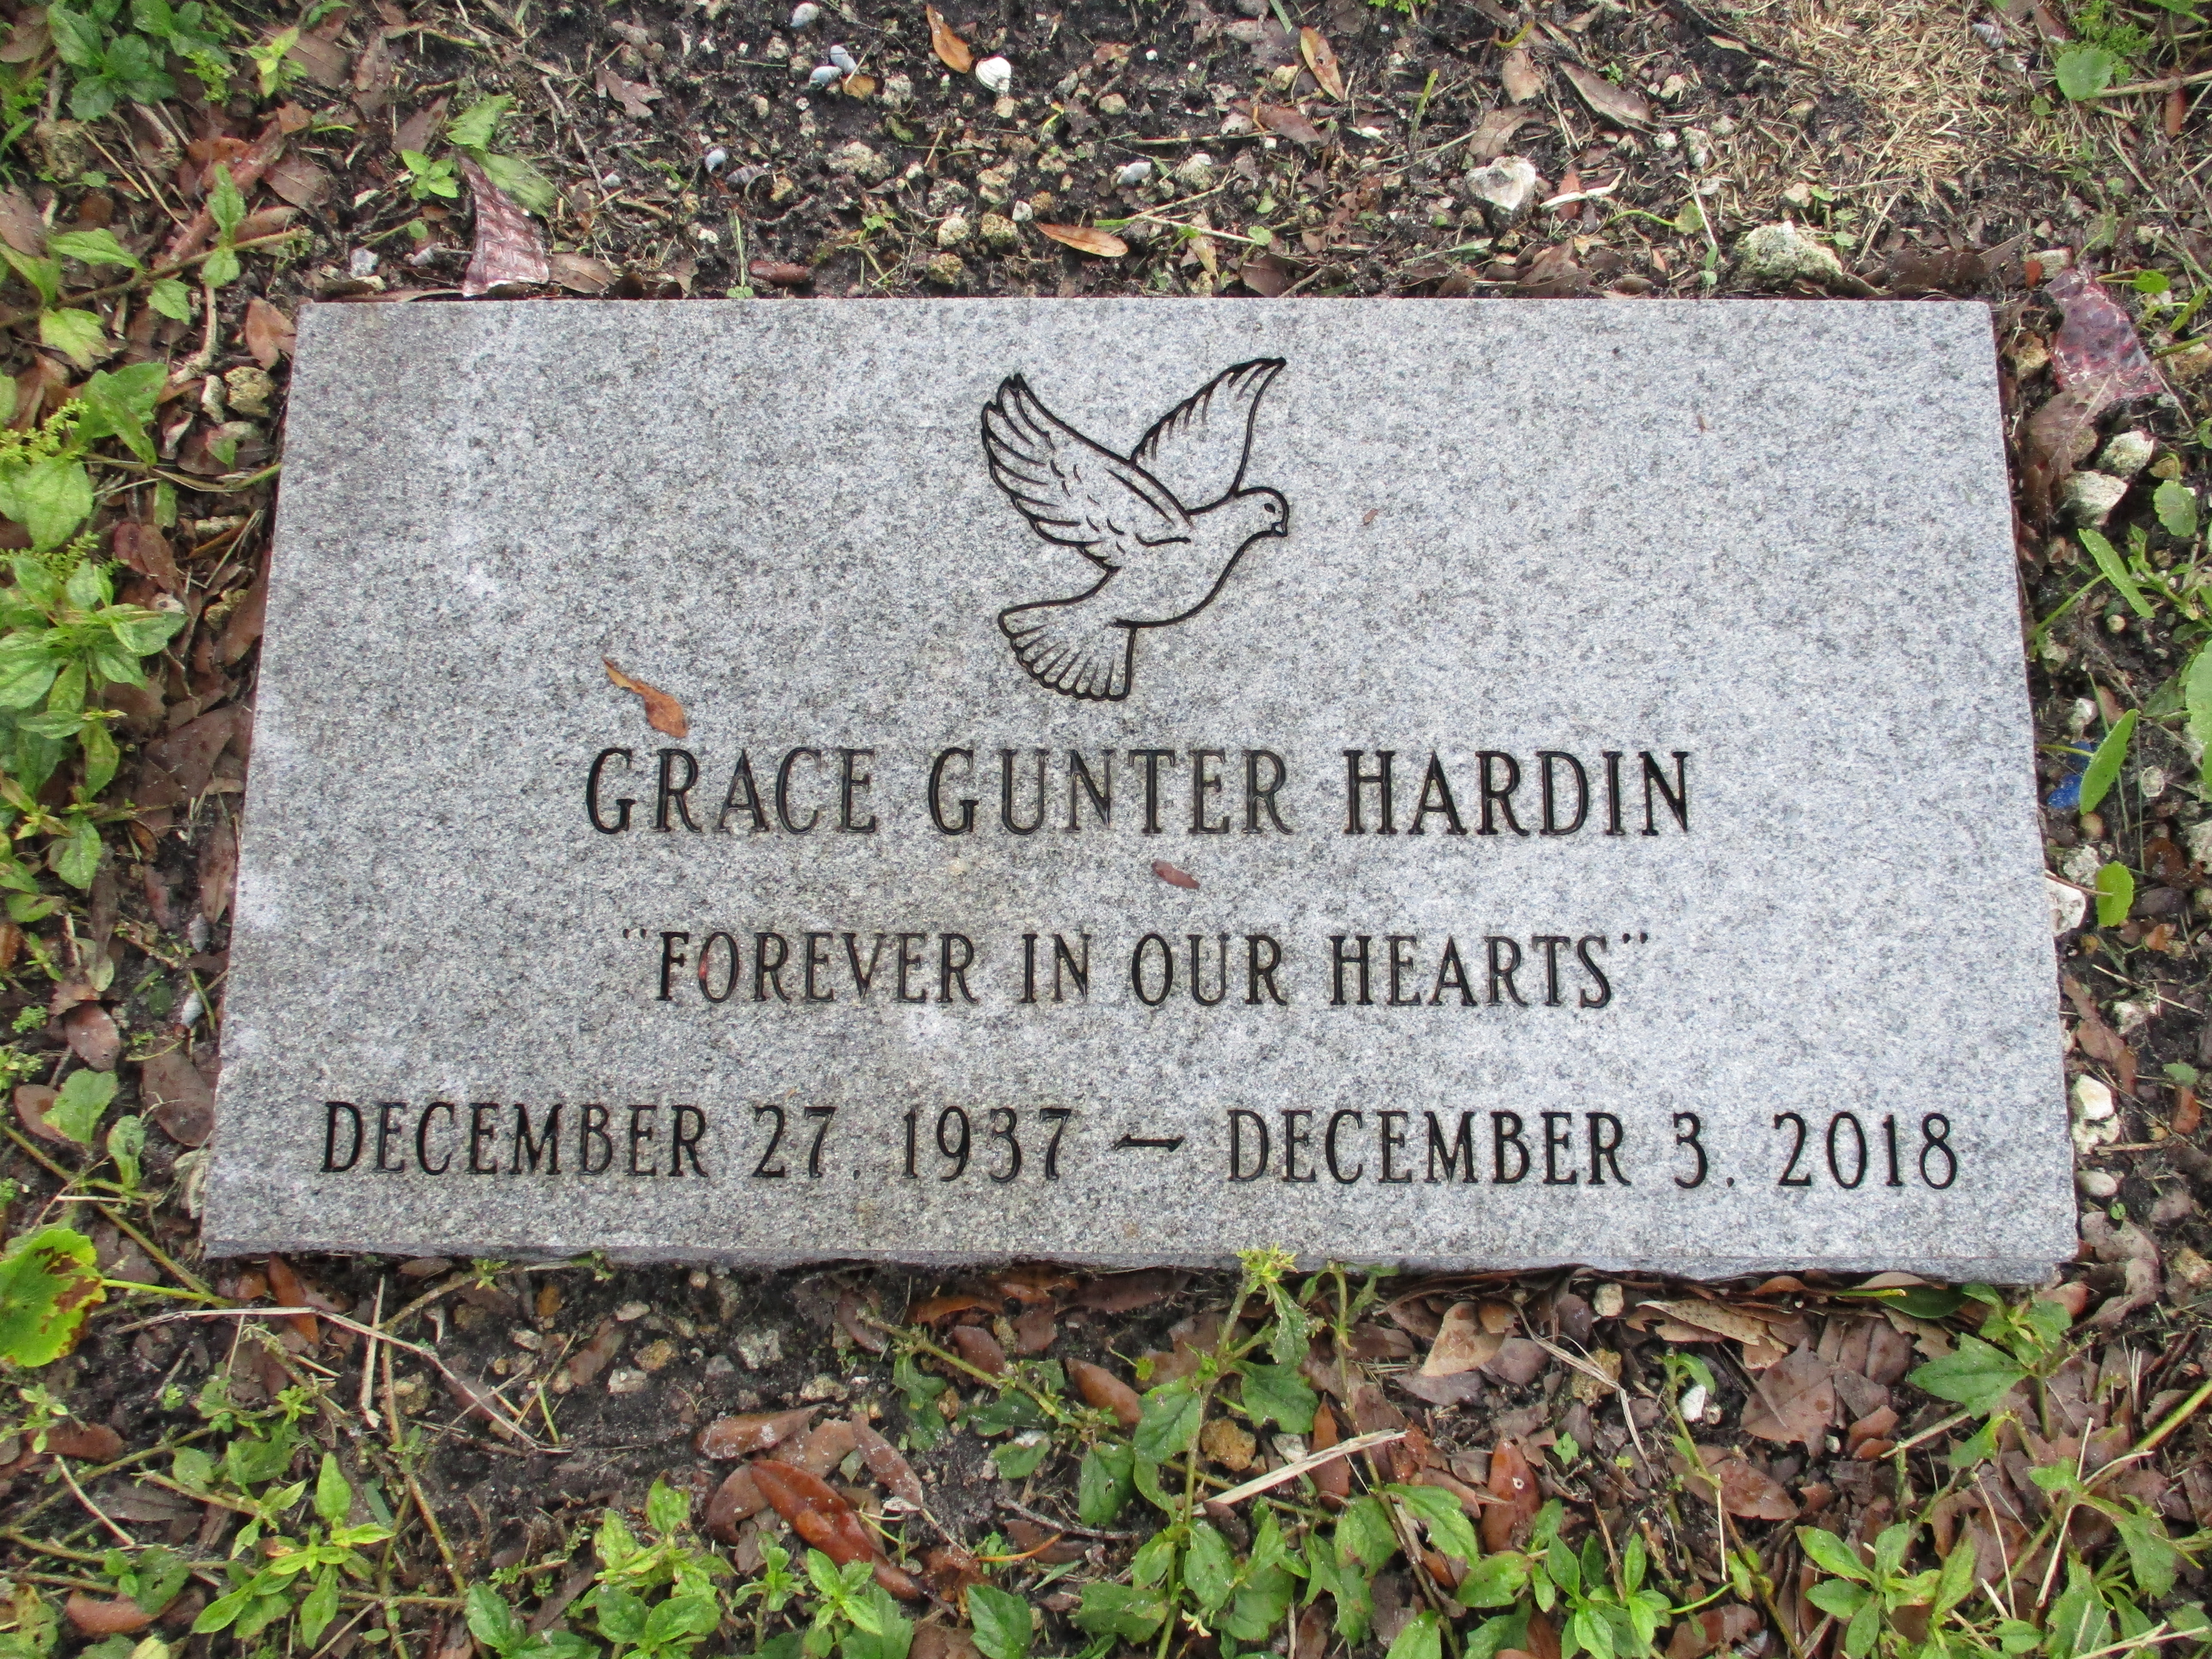 Grace Gunter Hardin